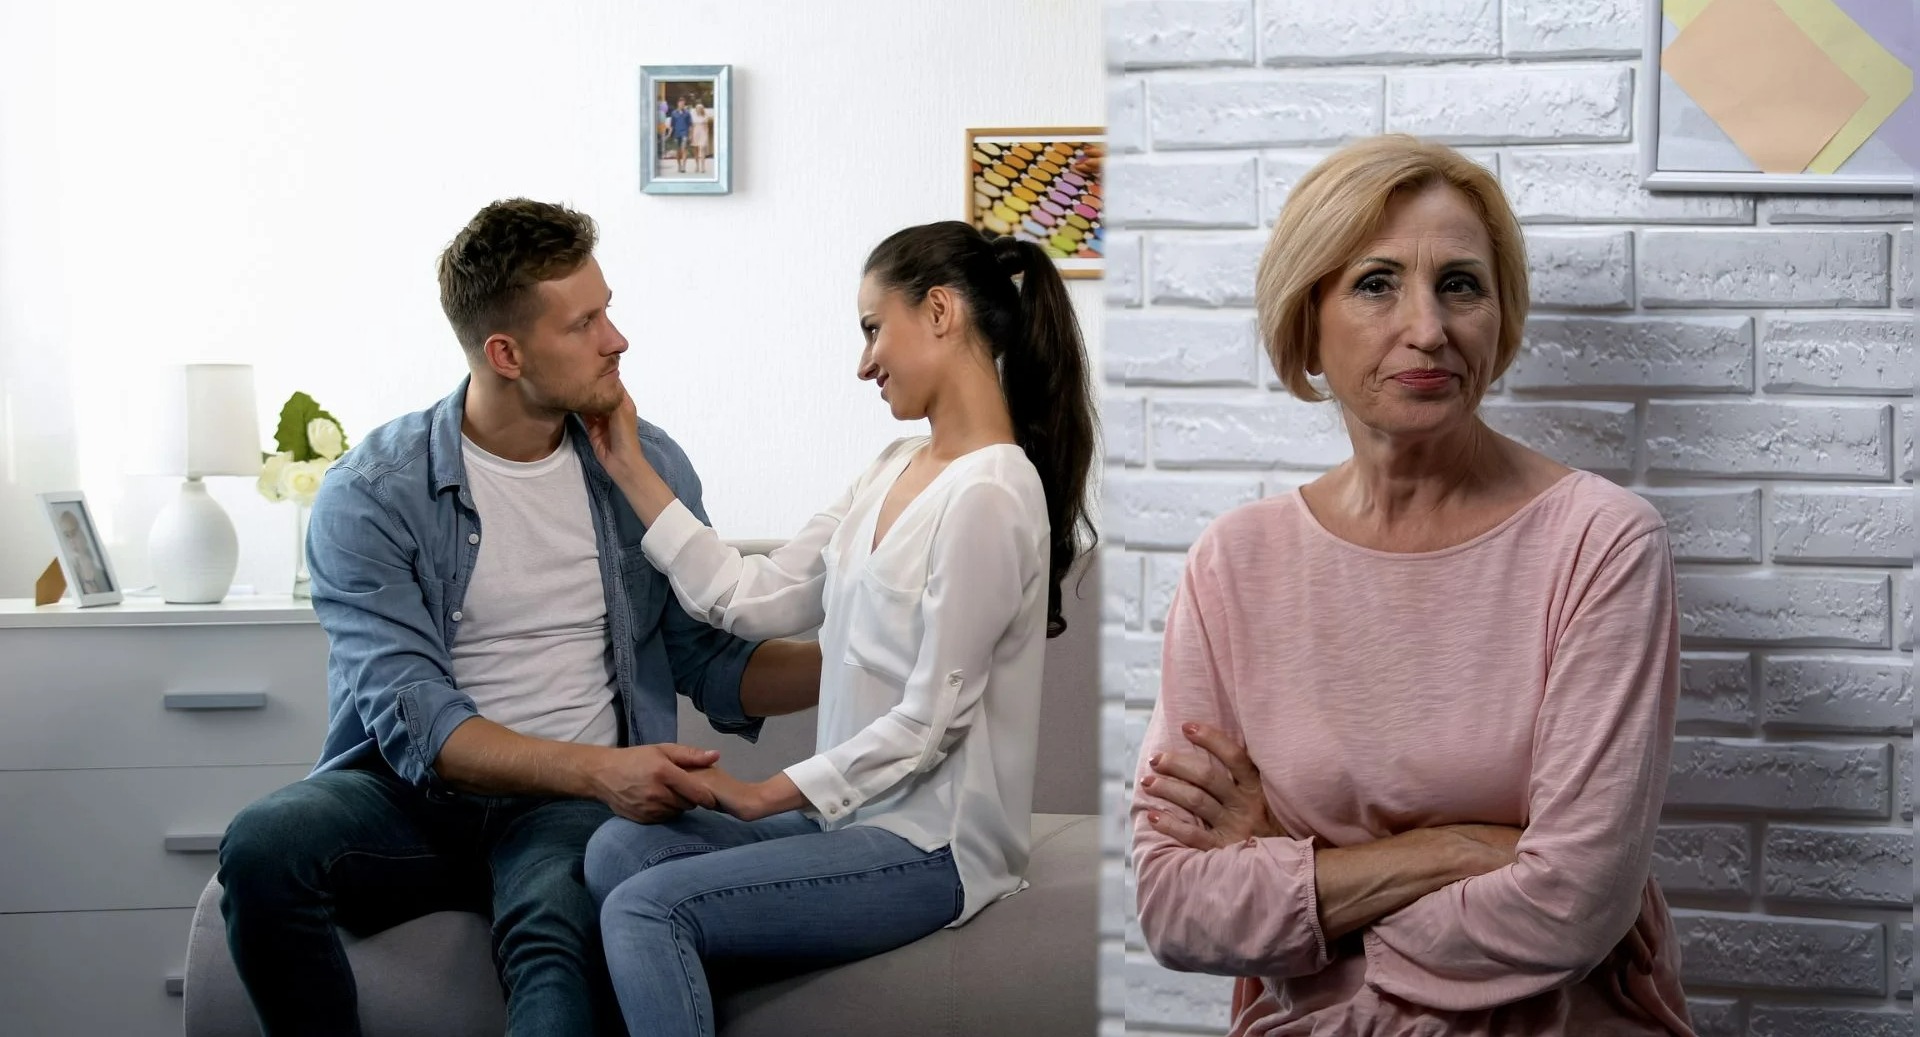 حسادت مادرشوهر - رفتار مقابل خانواده شوهر